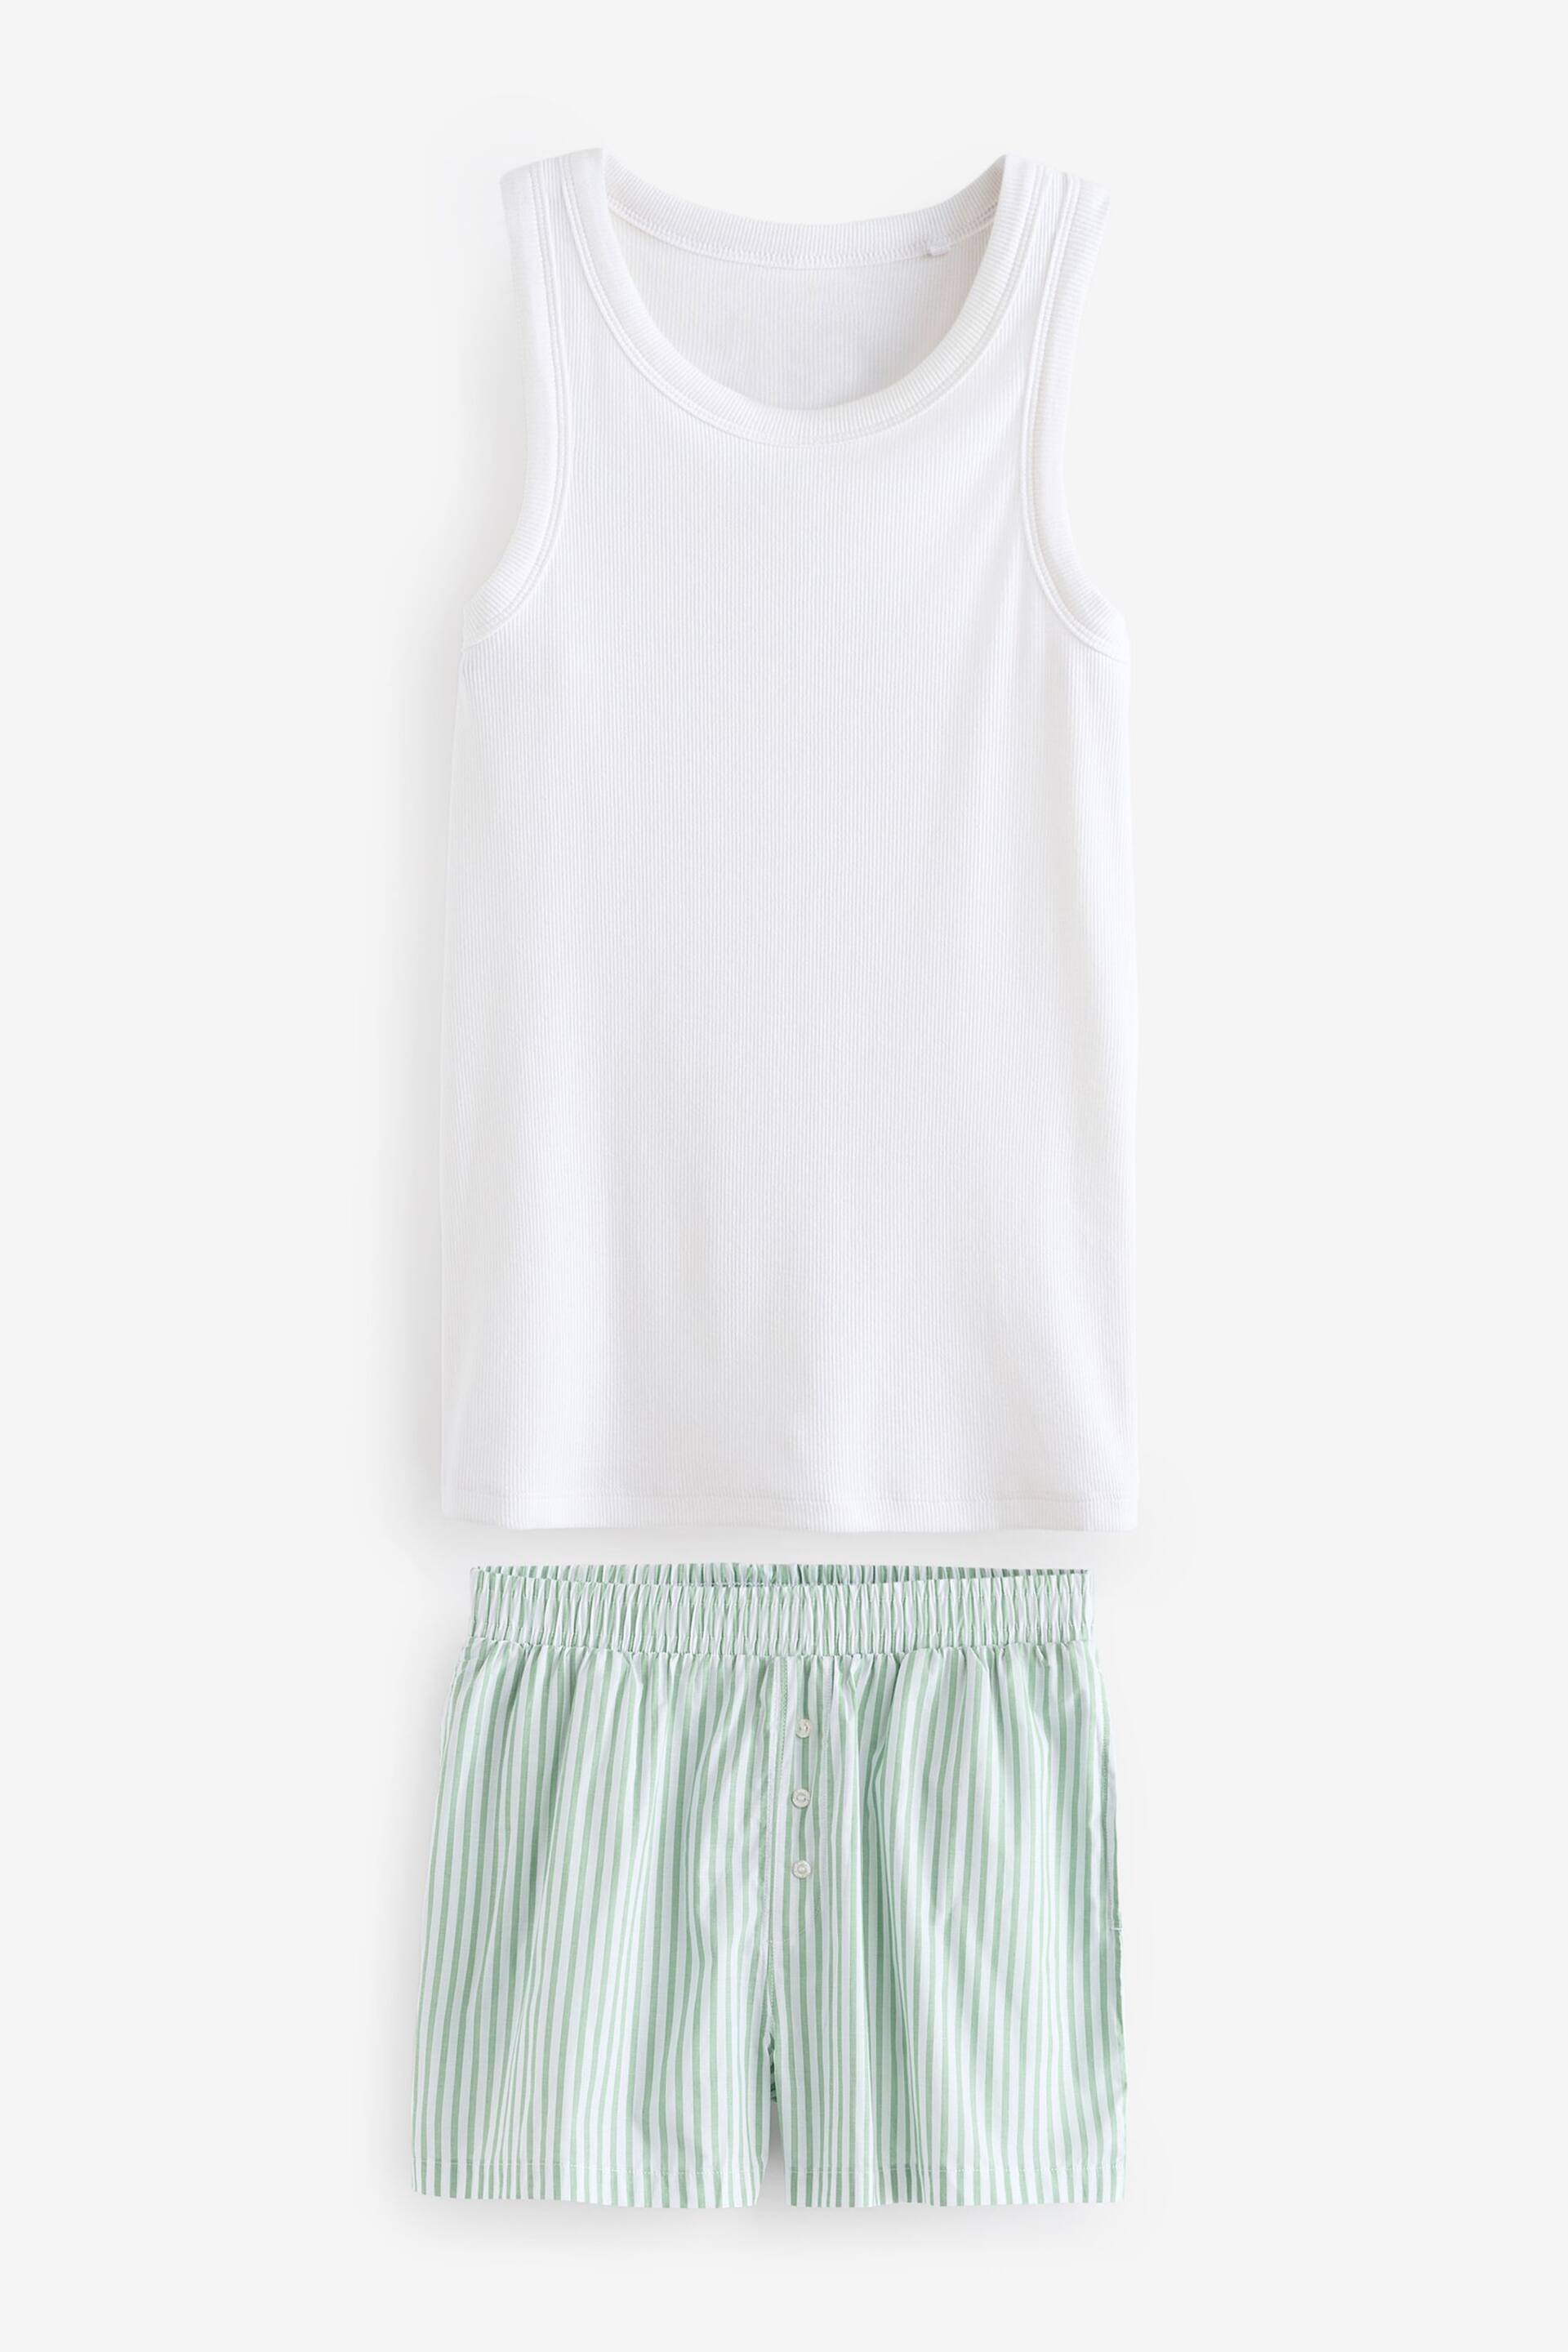 self. Green Rib Vest Short Pyjamas Set - Image 7 of 11